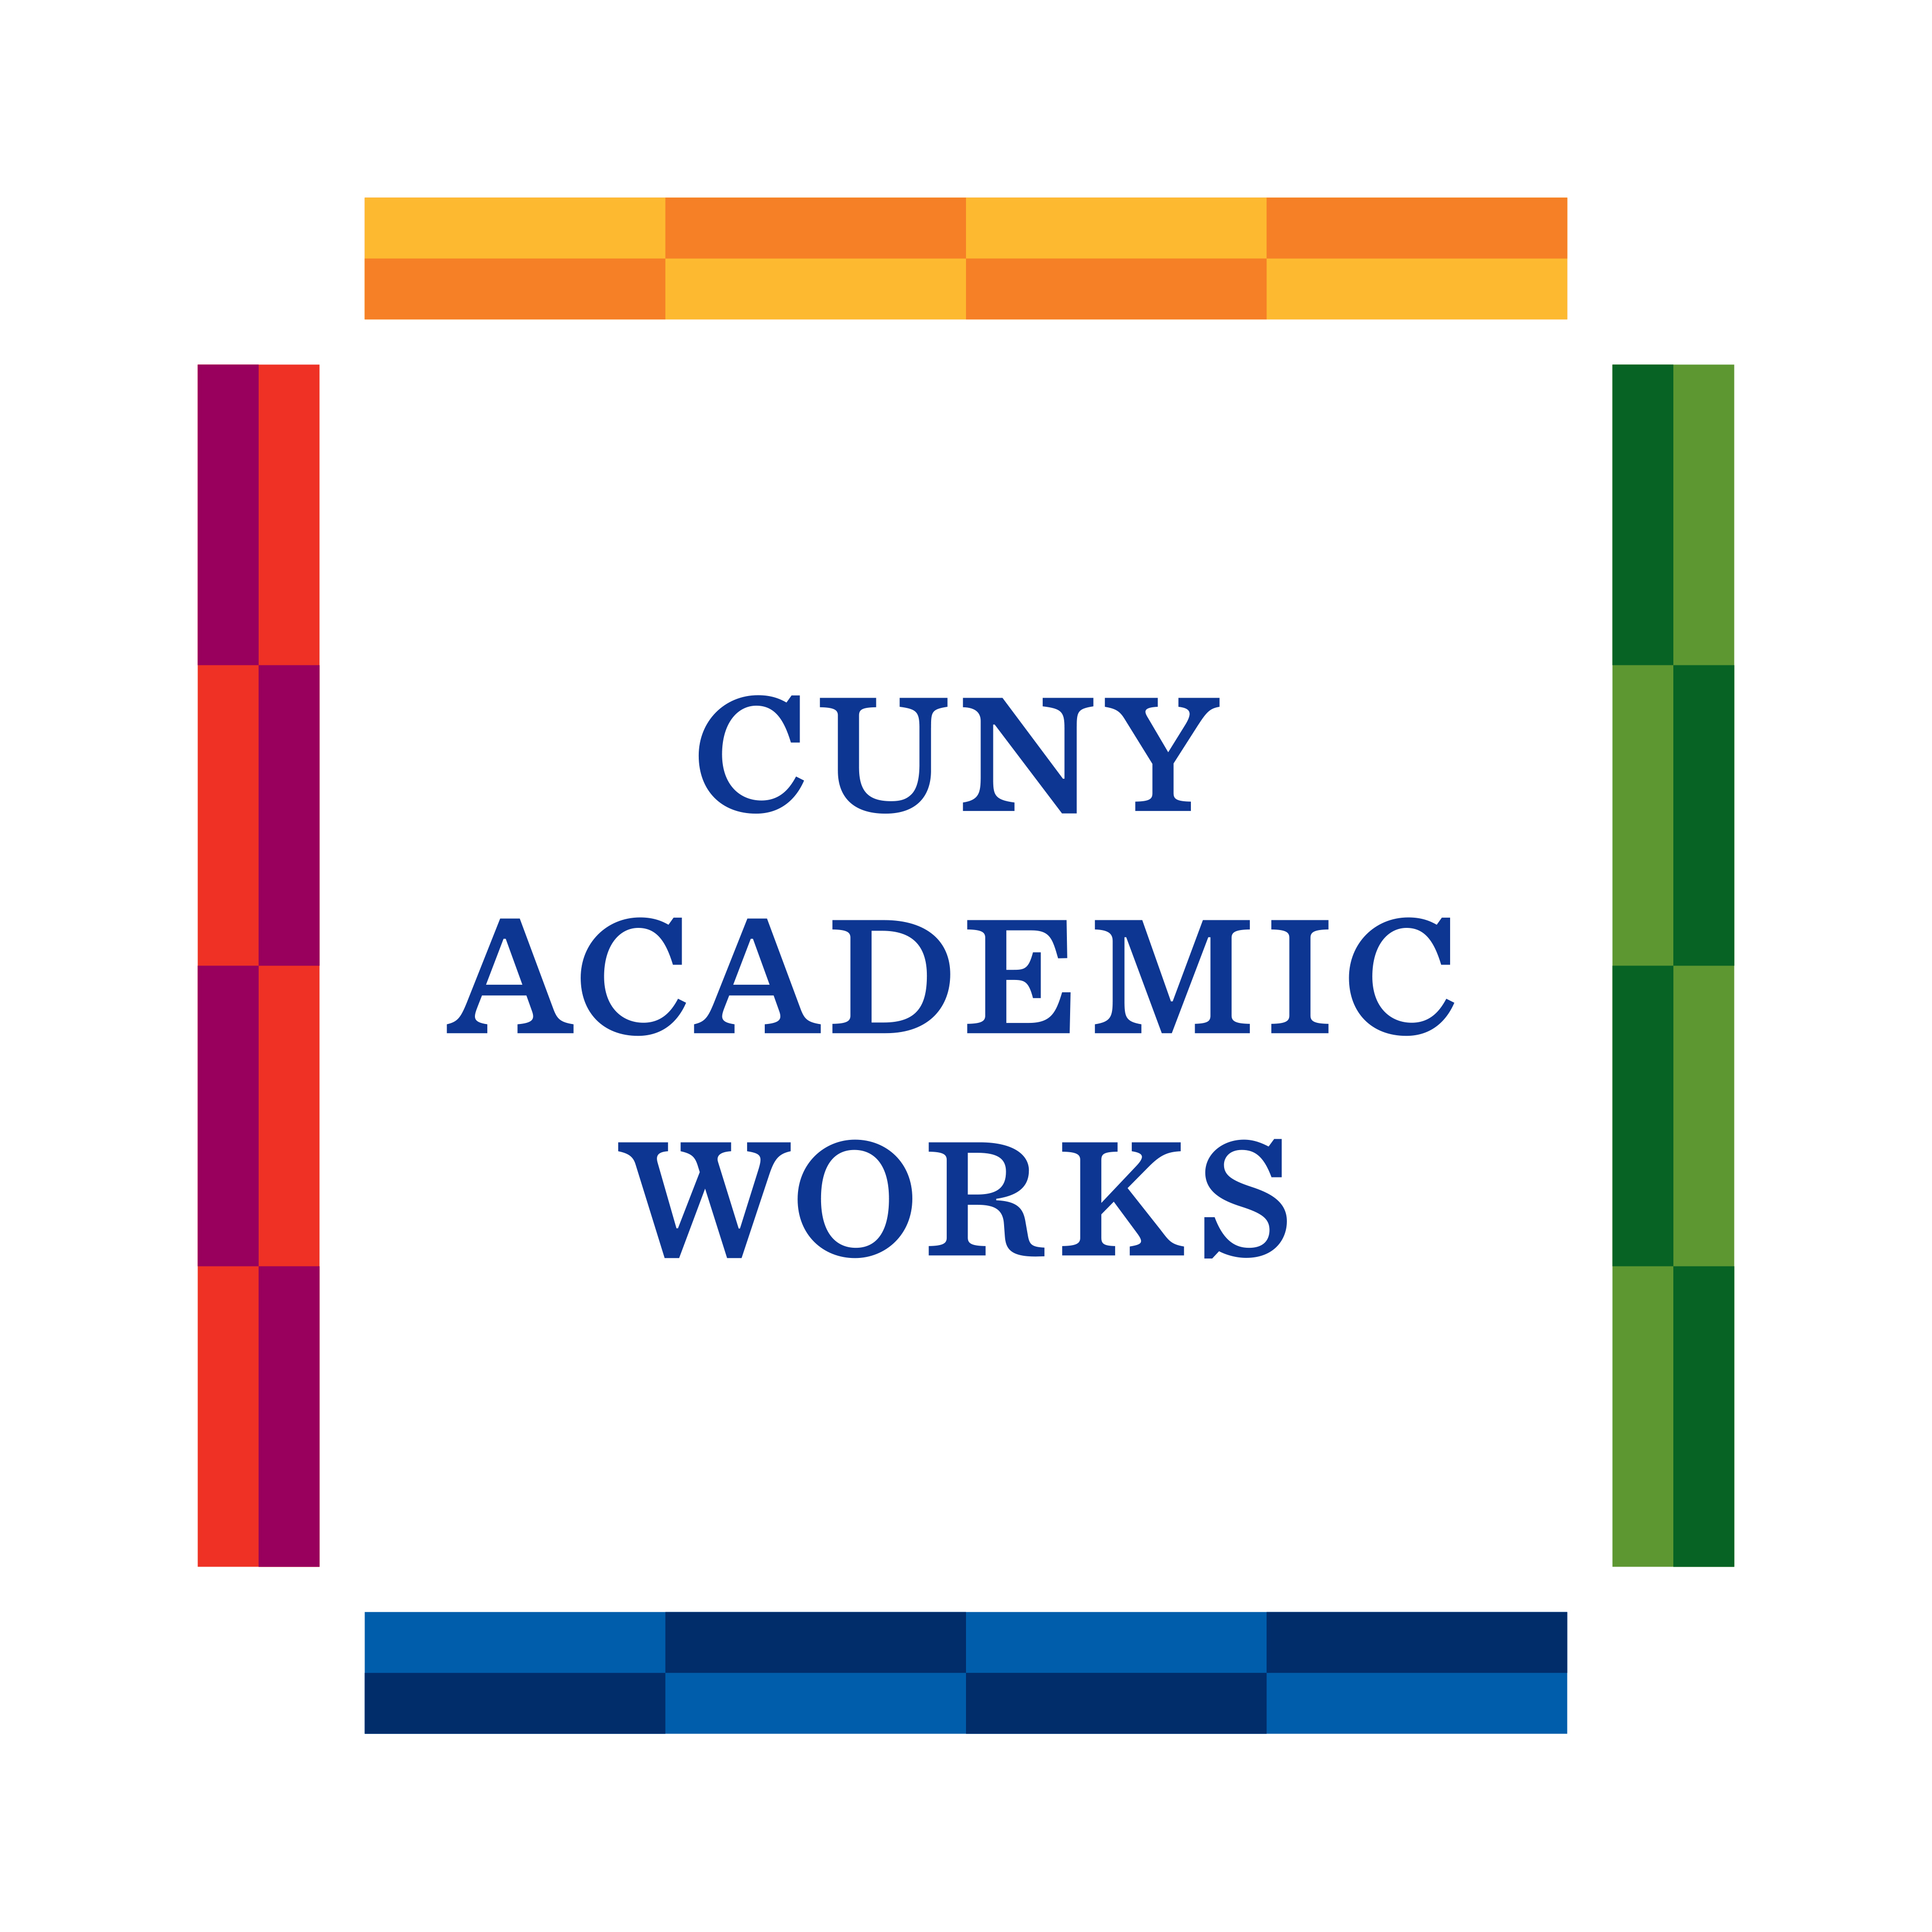 CUNY Academic Works